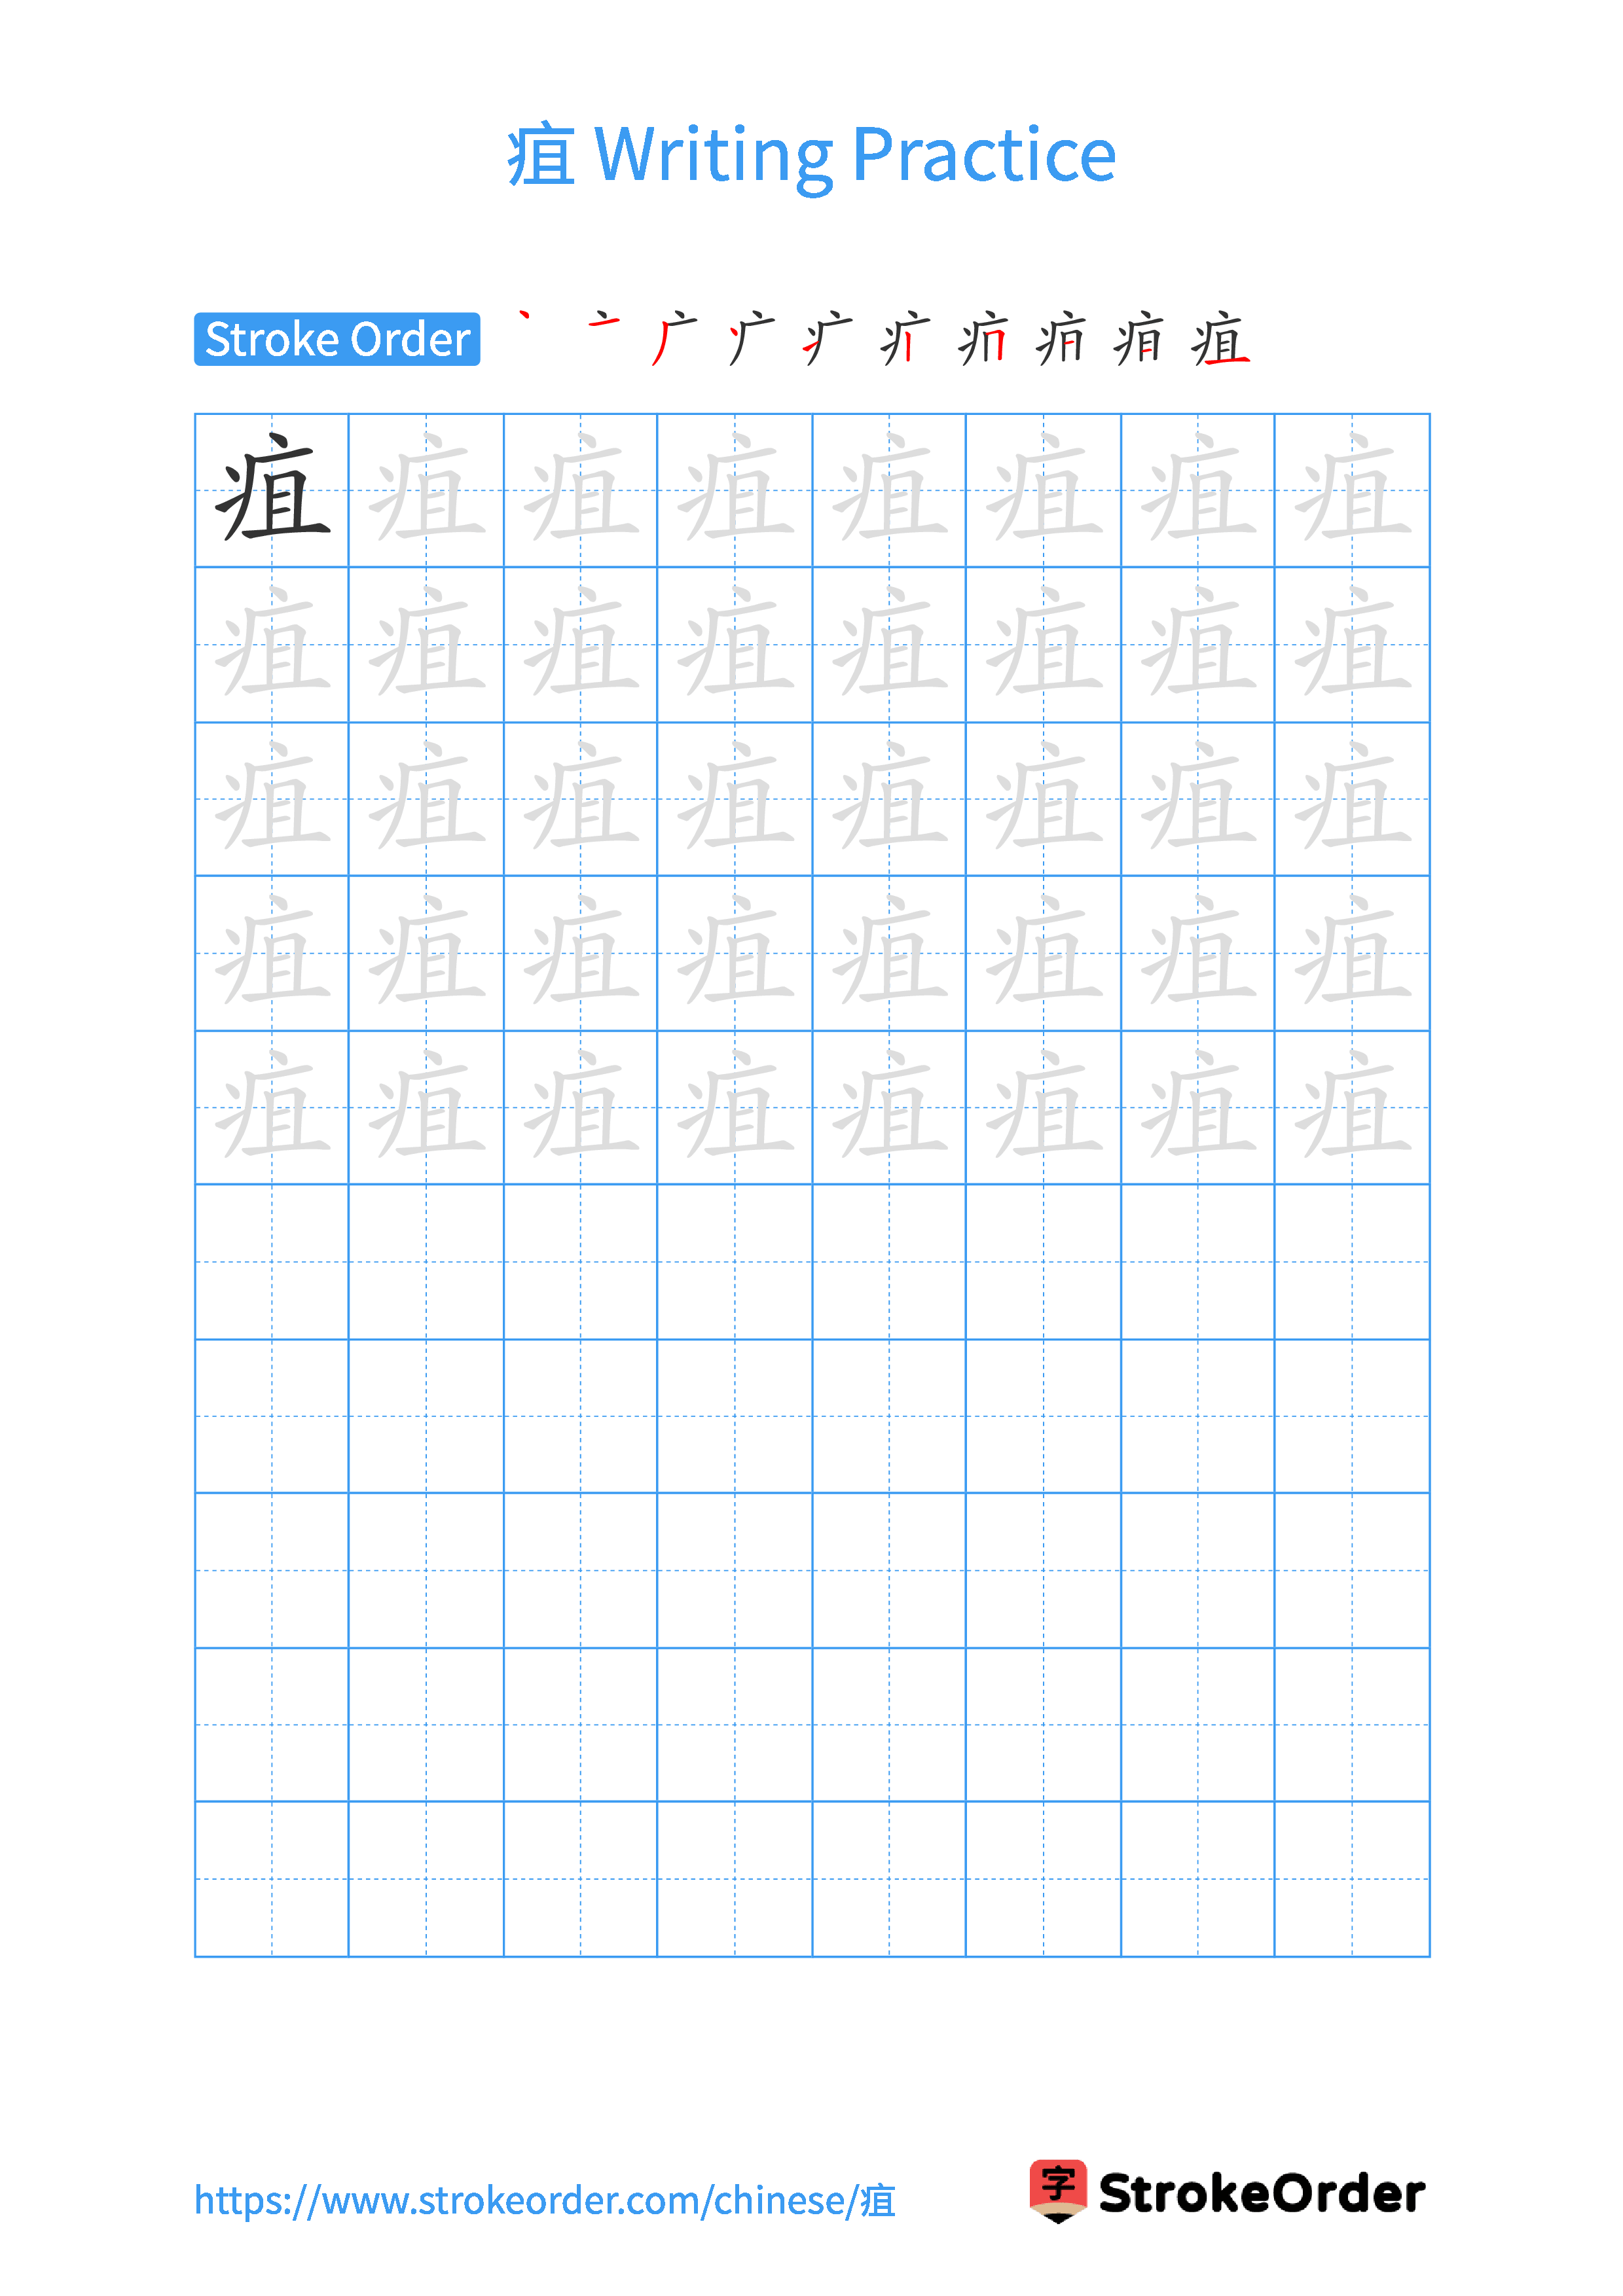 Printable Handwriting Practice Worksheet of the Chinese character 疽 in Portrait Orientation (Tian Zi Ge)